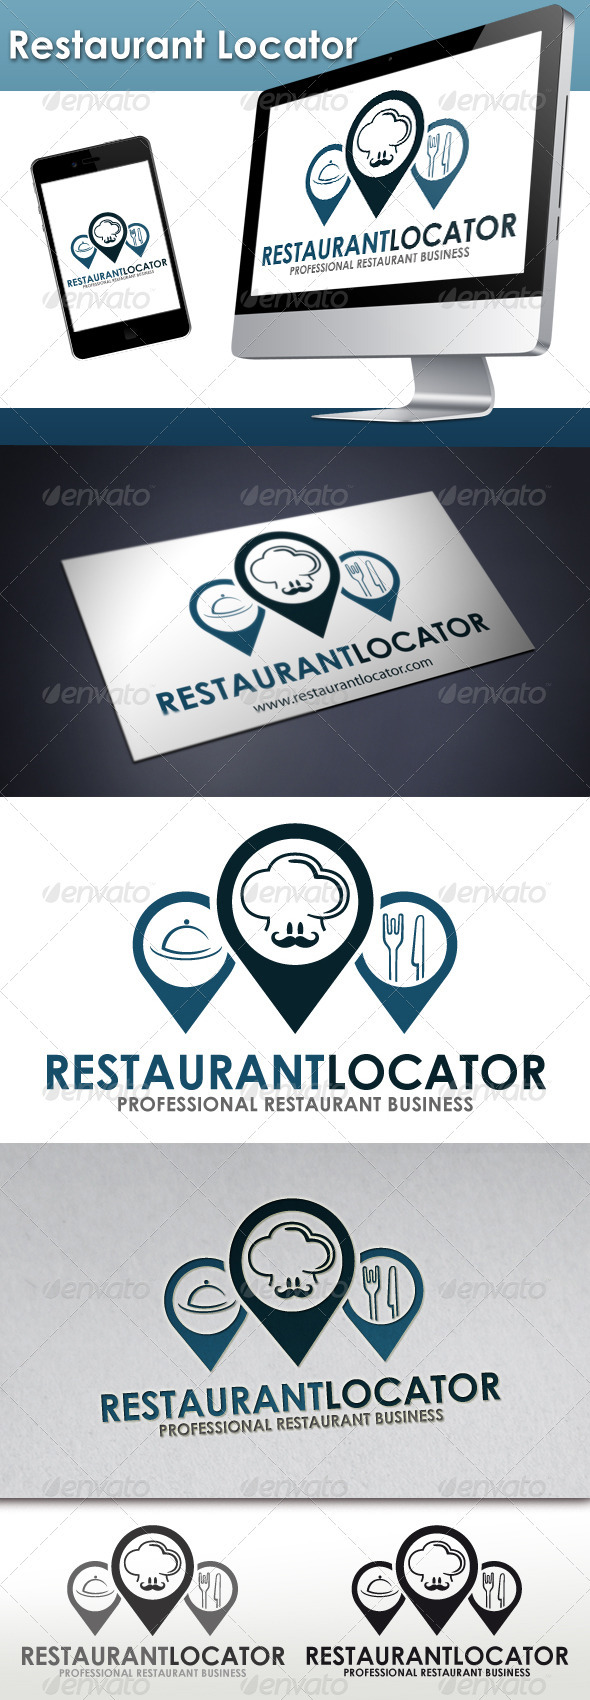 Restaurant Locator Logo